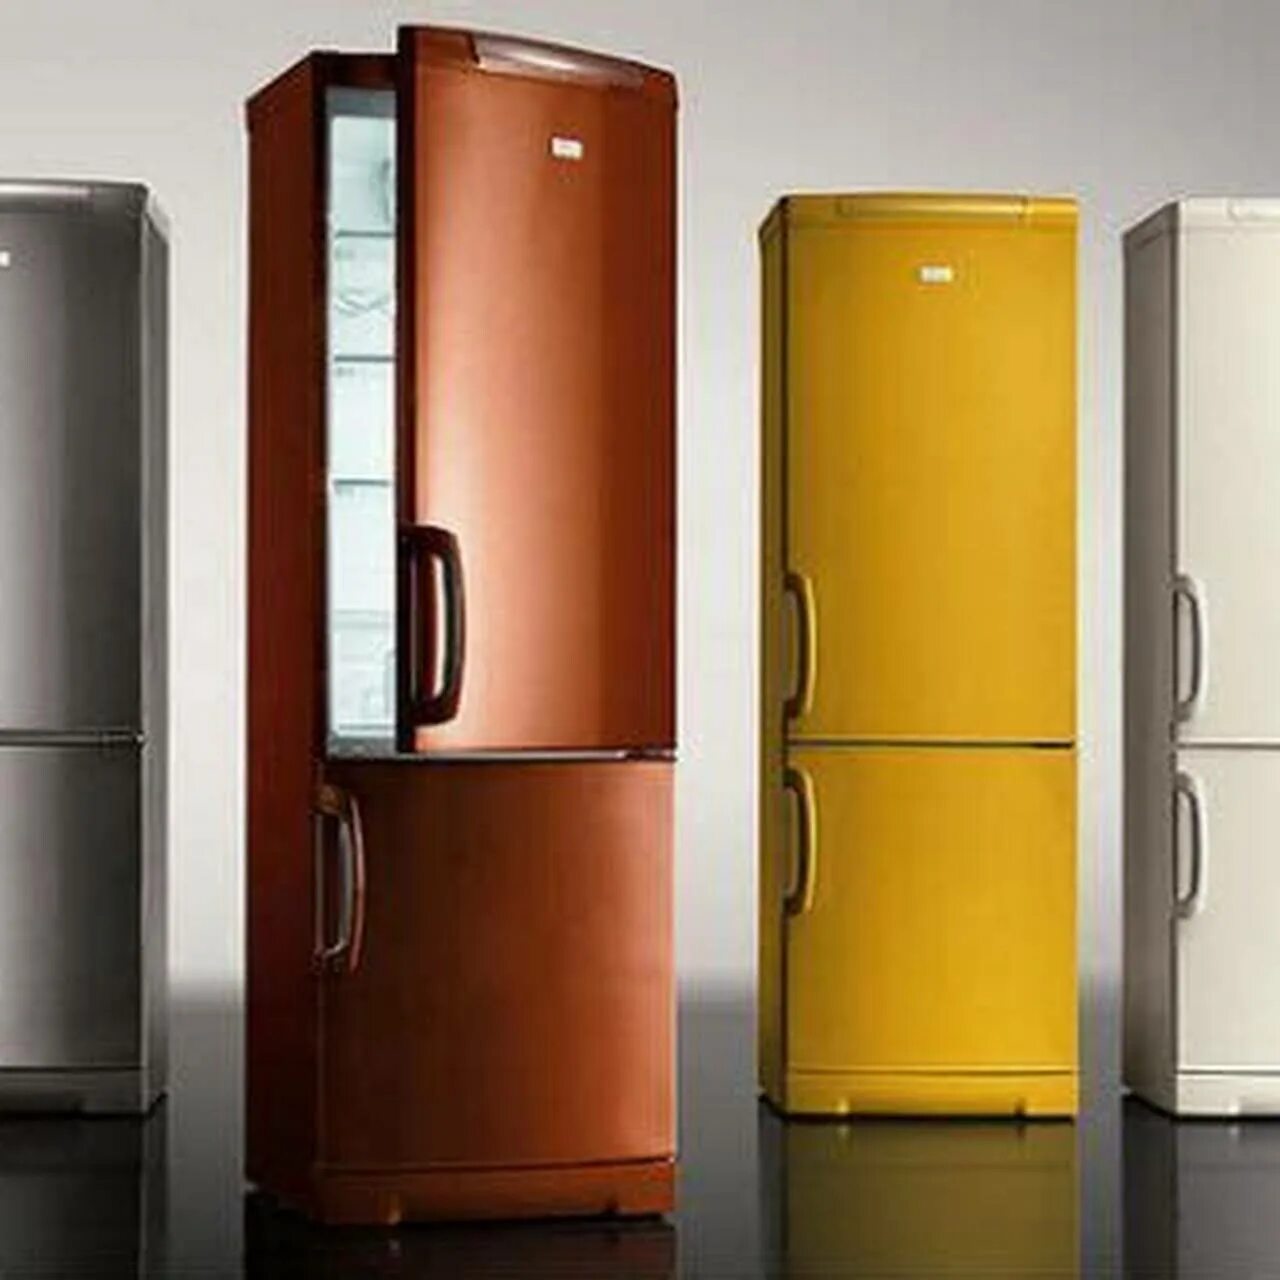 Марки холодильников. Холодильники в ряд. Много холодильников. Фирмы холодильников.